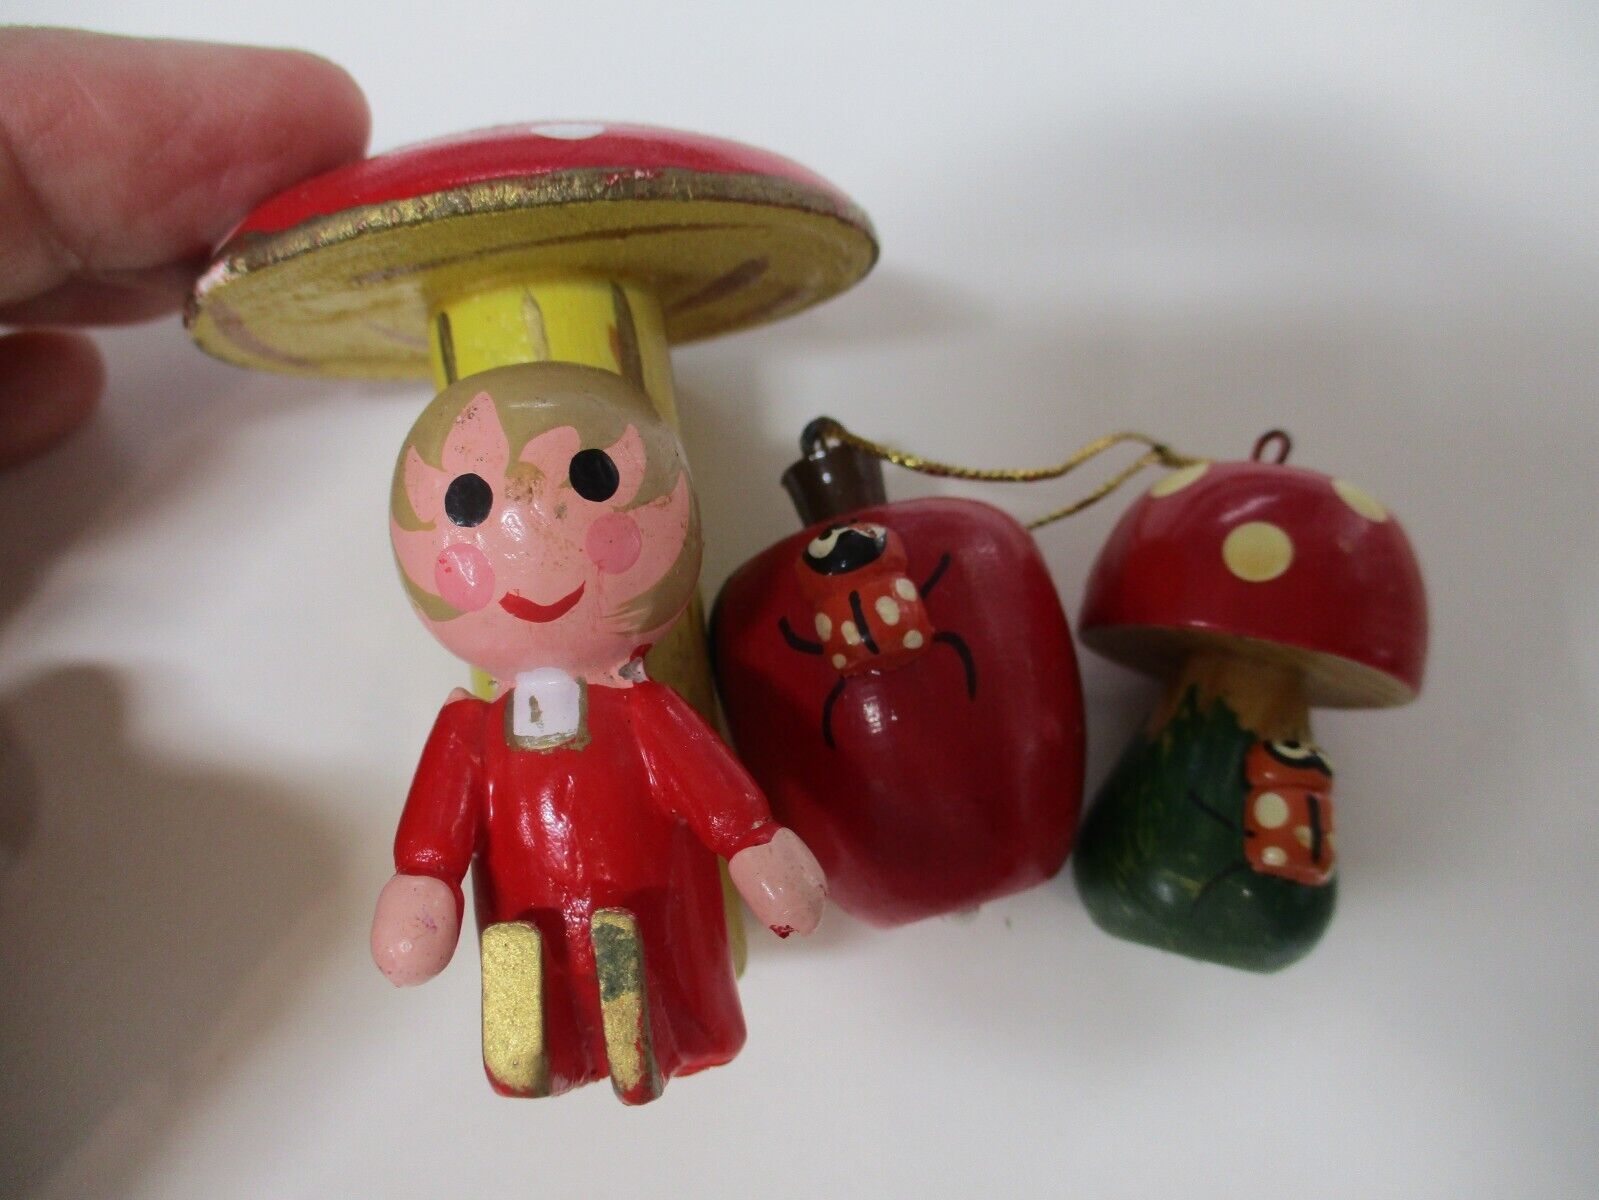 VINTAGE 1960's wooden mushroom ladybug apple LOT 3 wood ornaments Rebublic China